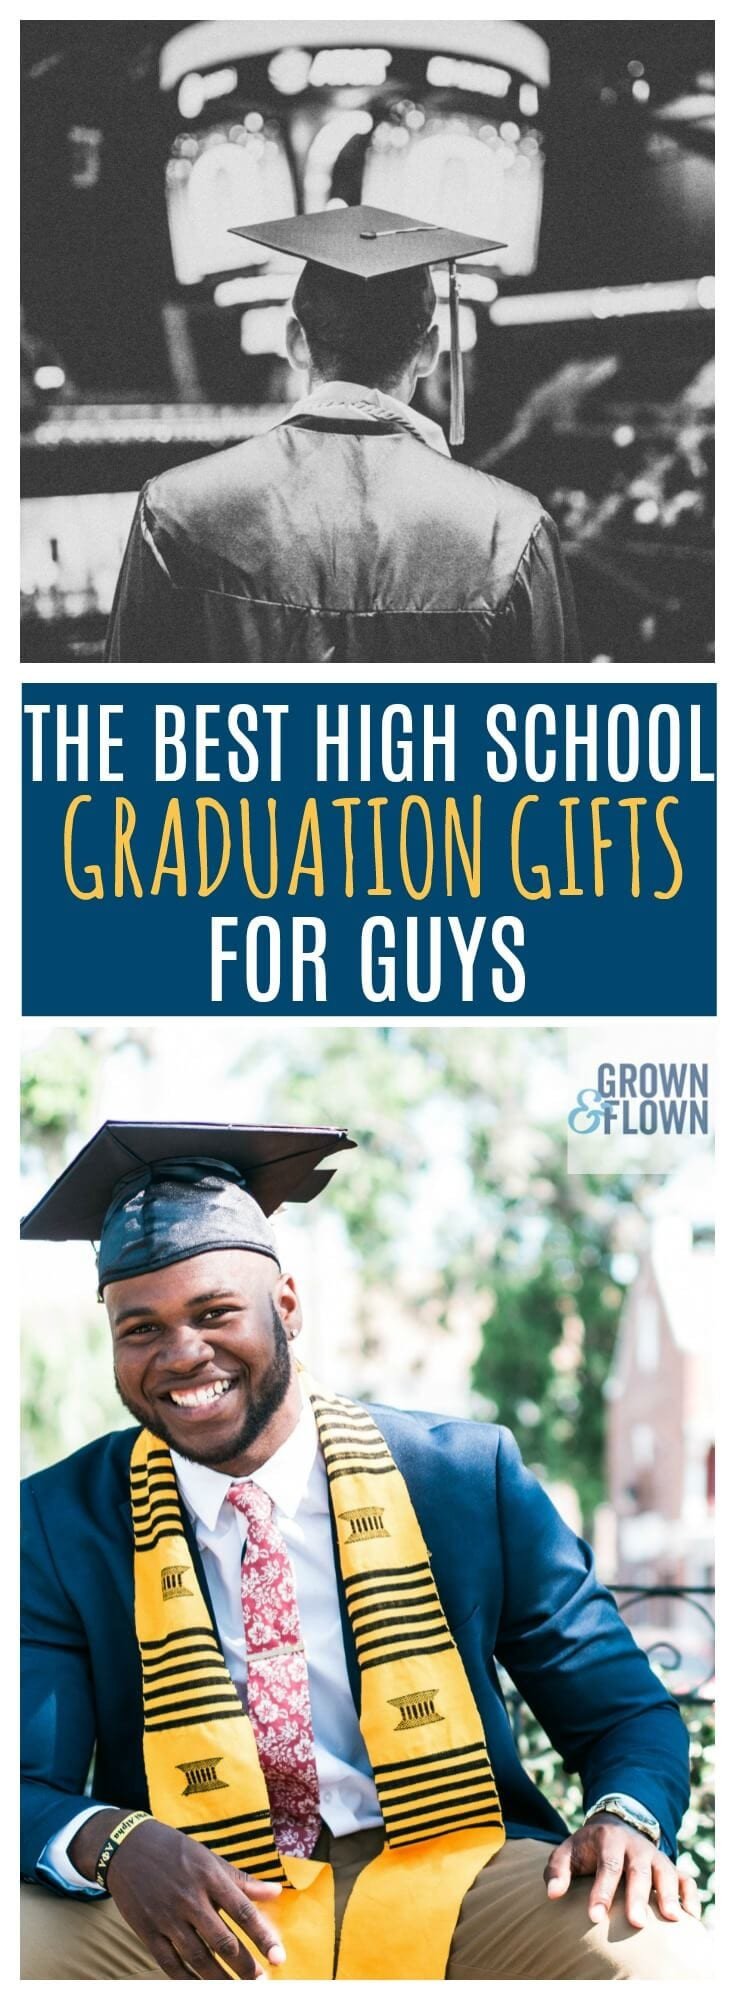 High School Graduation Gift Ideas For Guys
 2020 High School Graduation Gifts for Guys They Will Love